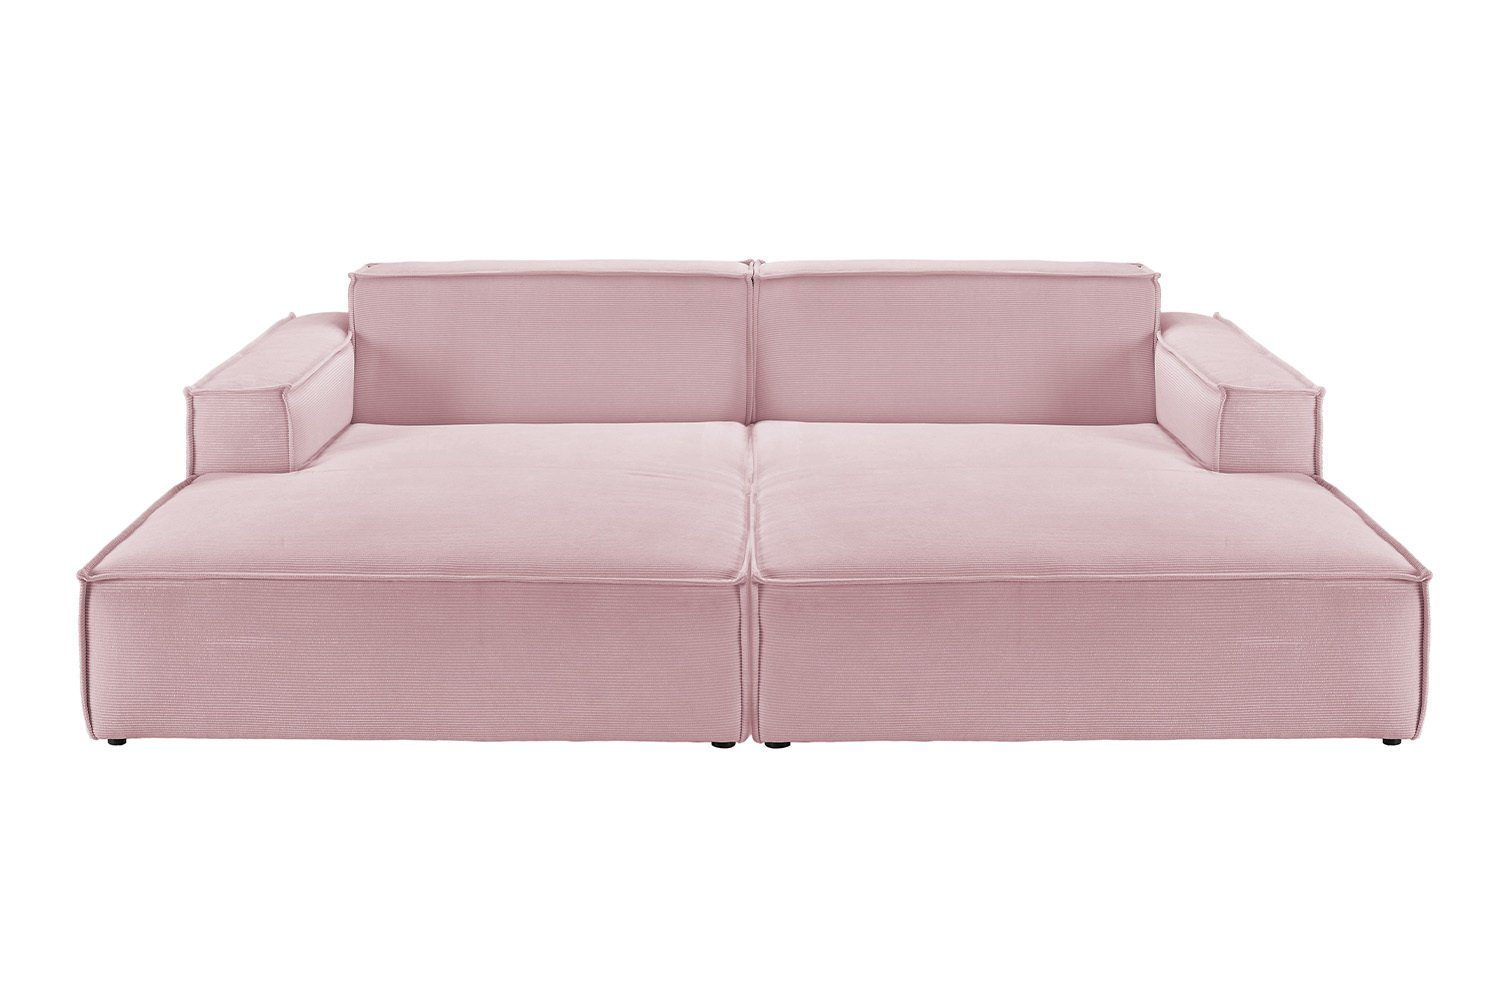 SAMU, Farben rosa Sofa verschiedene KAWOLA Feincord Big-Sofa